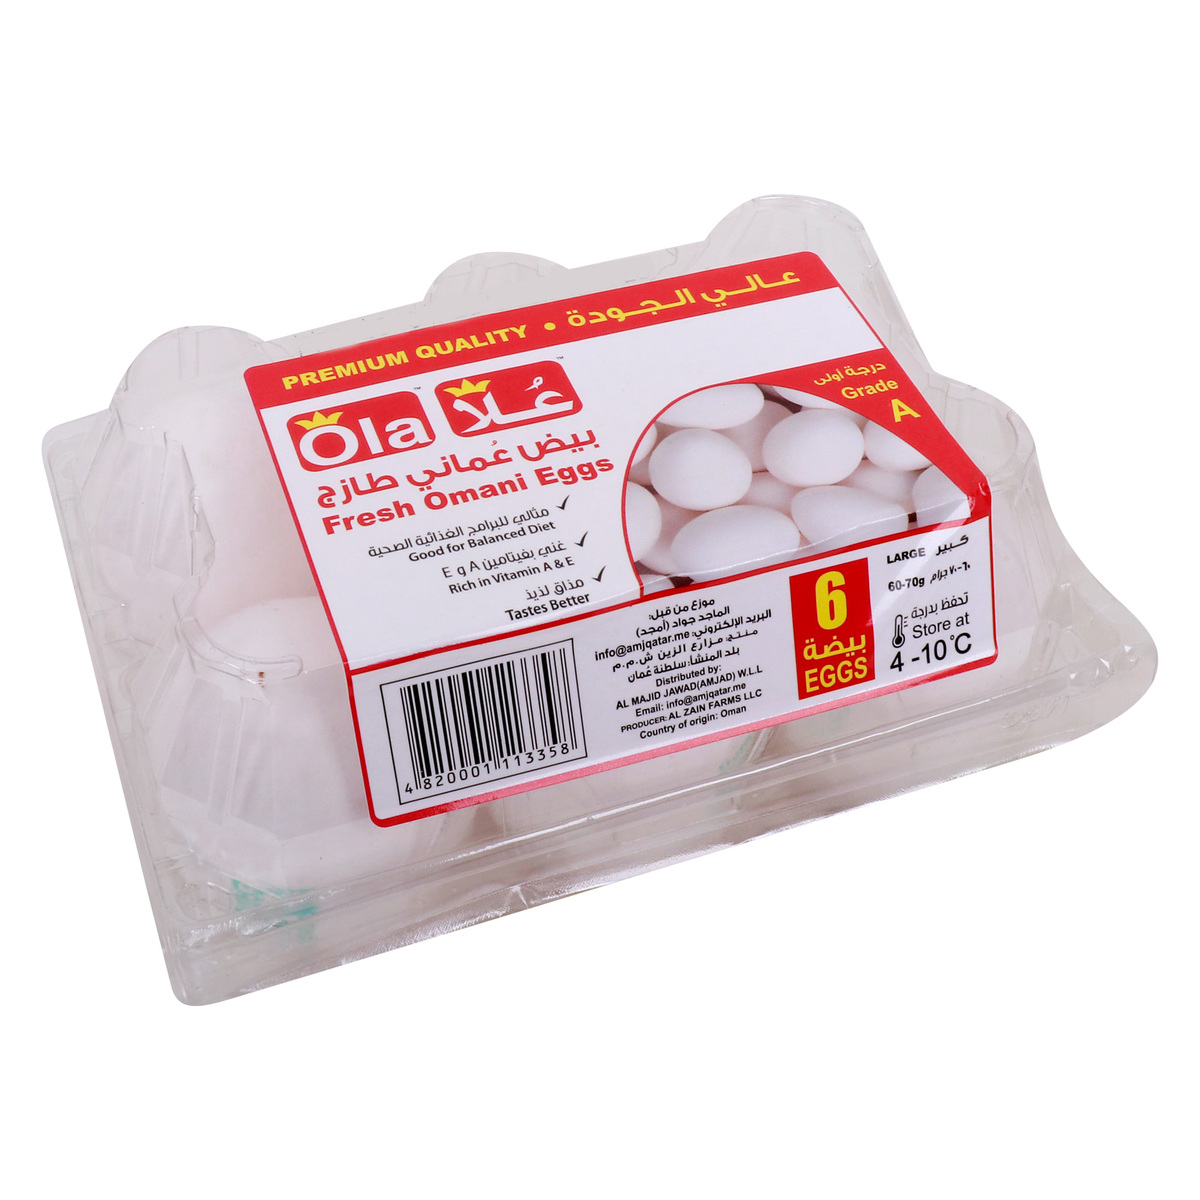 Ola White Eggs, Large, 6 pcs